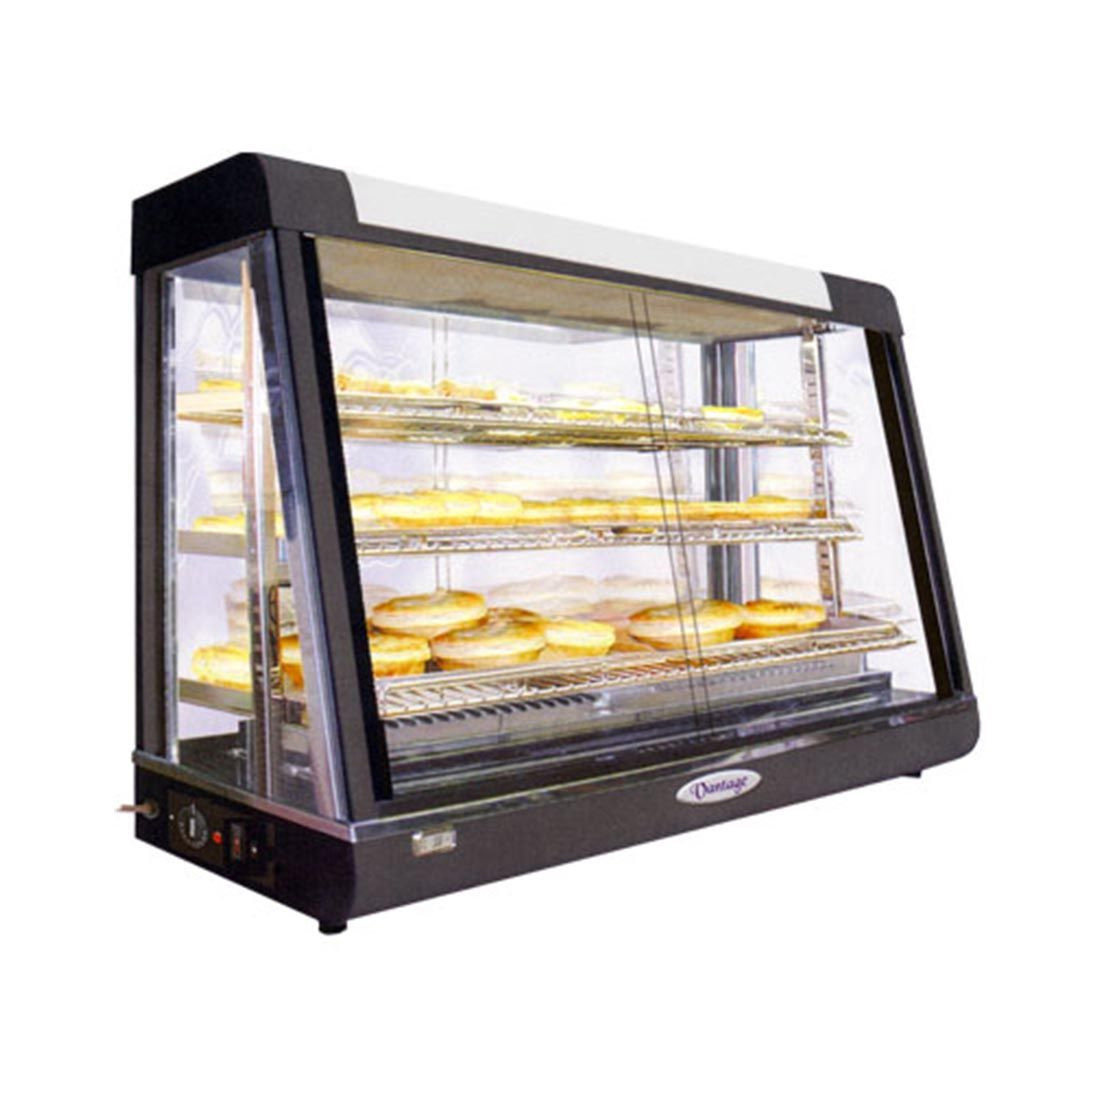 Benchstar Pie Warmer & Hot Food Display - PW-RT/900/1E - 900x490x610mm